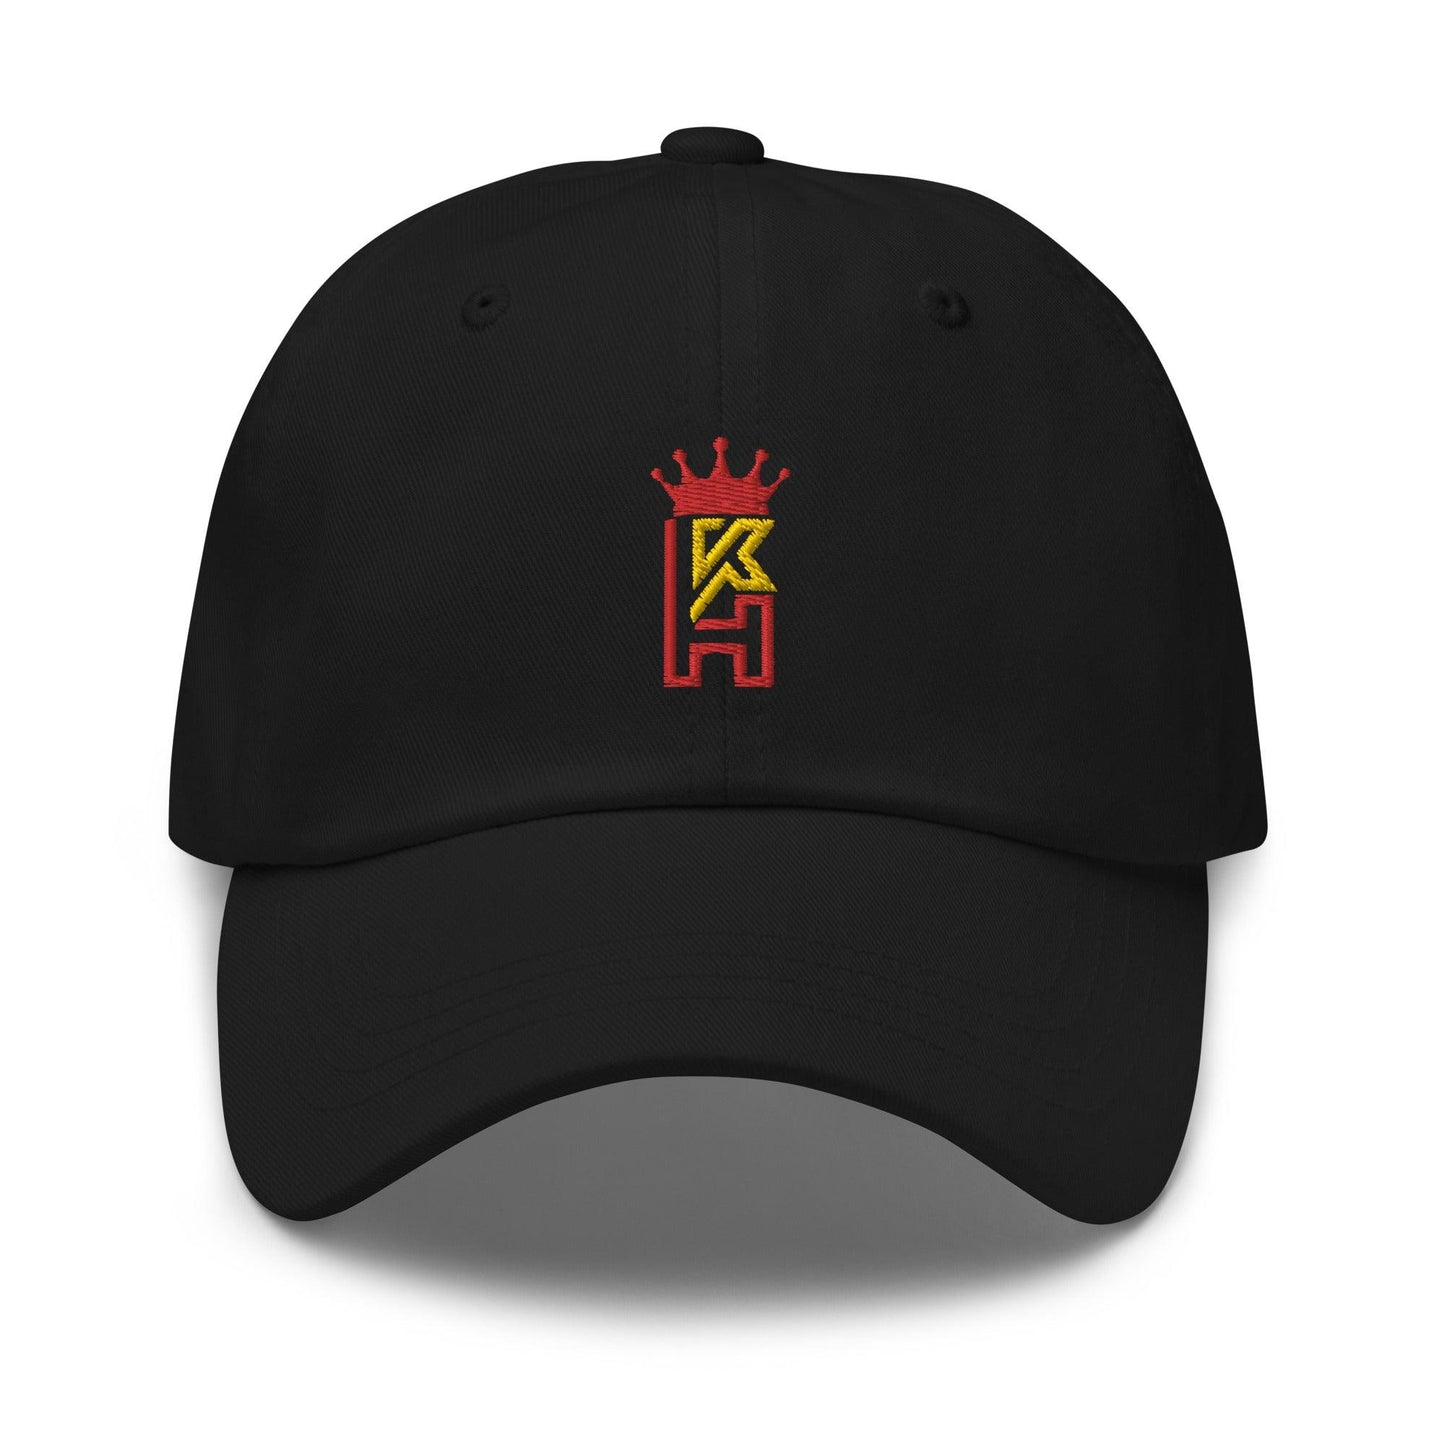 Keiondre Hall “Elite” hat - Fan Arch